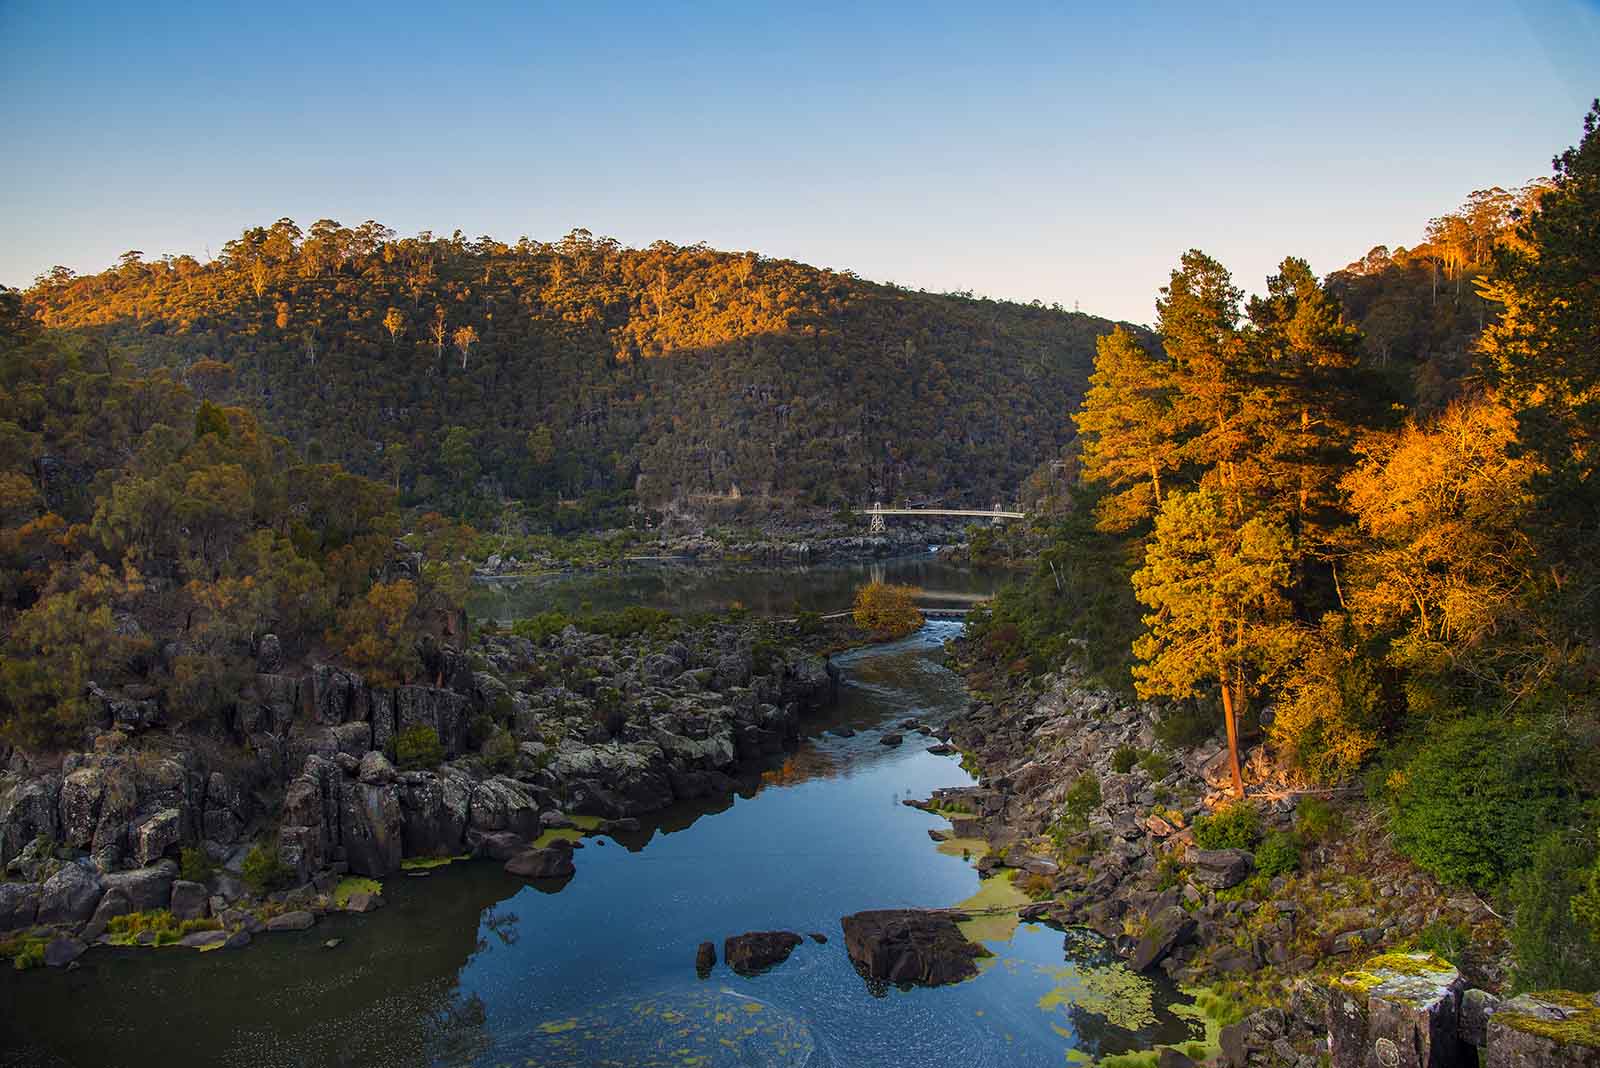 Cataract Gorge near Launceston, Tasmania